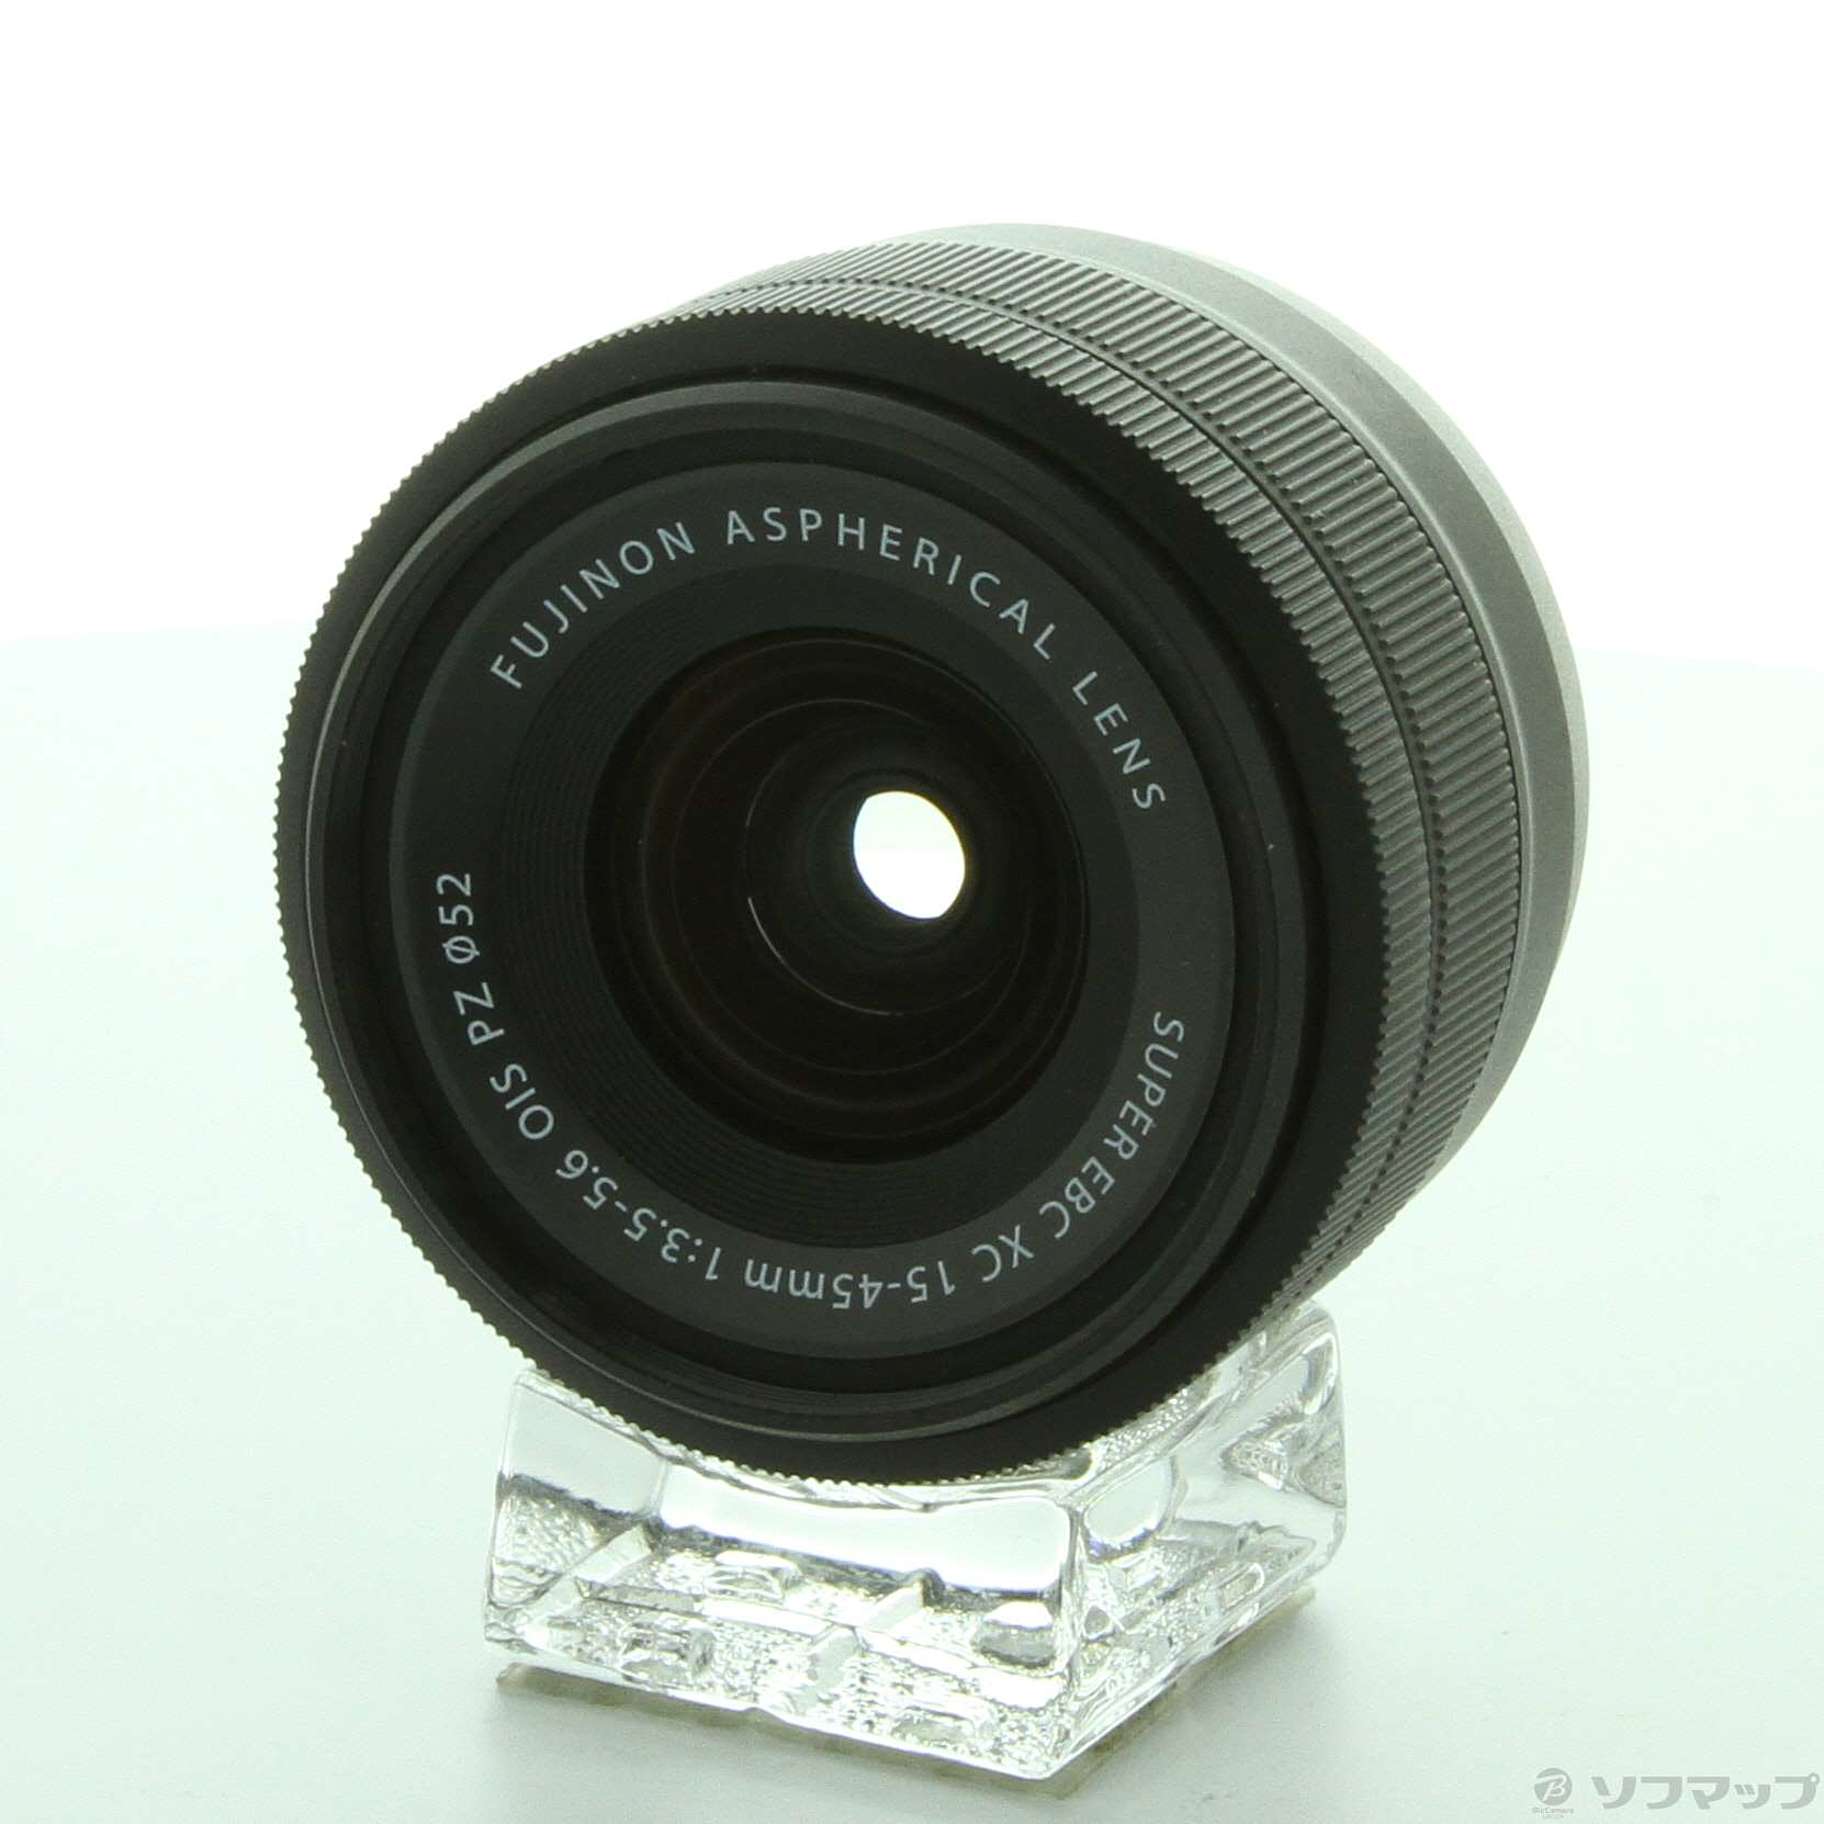 XC15-45mm F3.5-5.6 OIS PZ ブラック